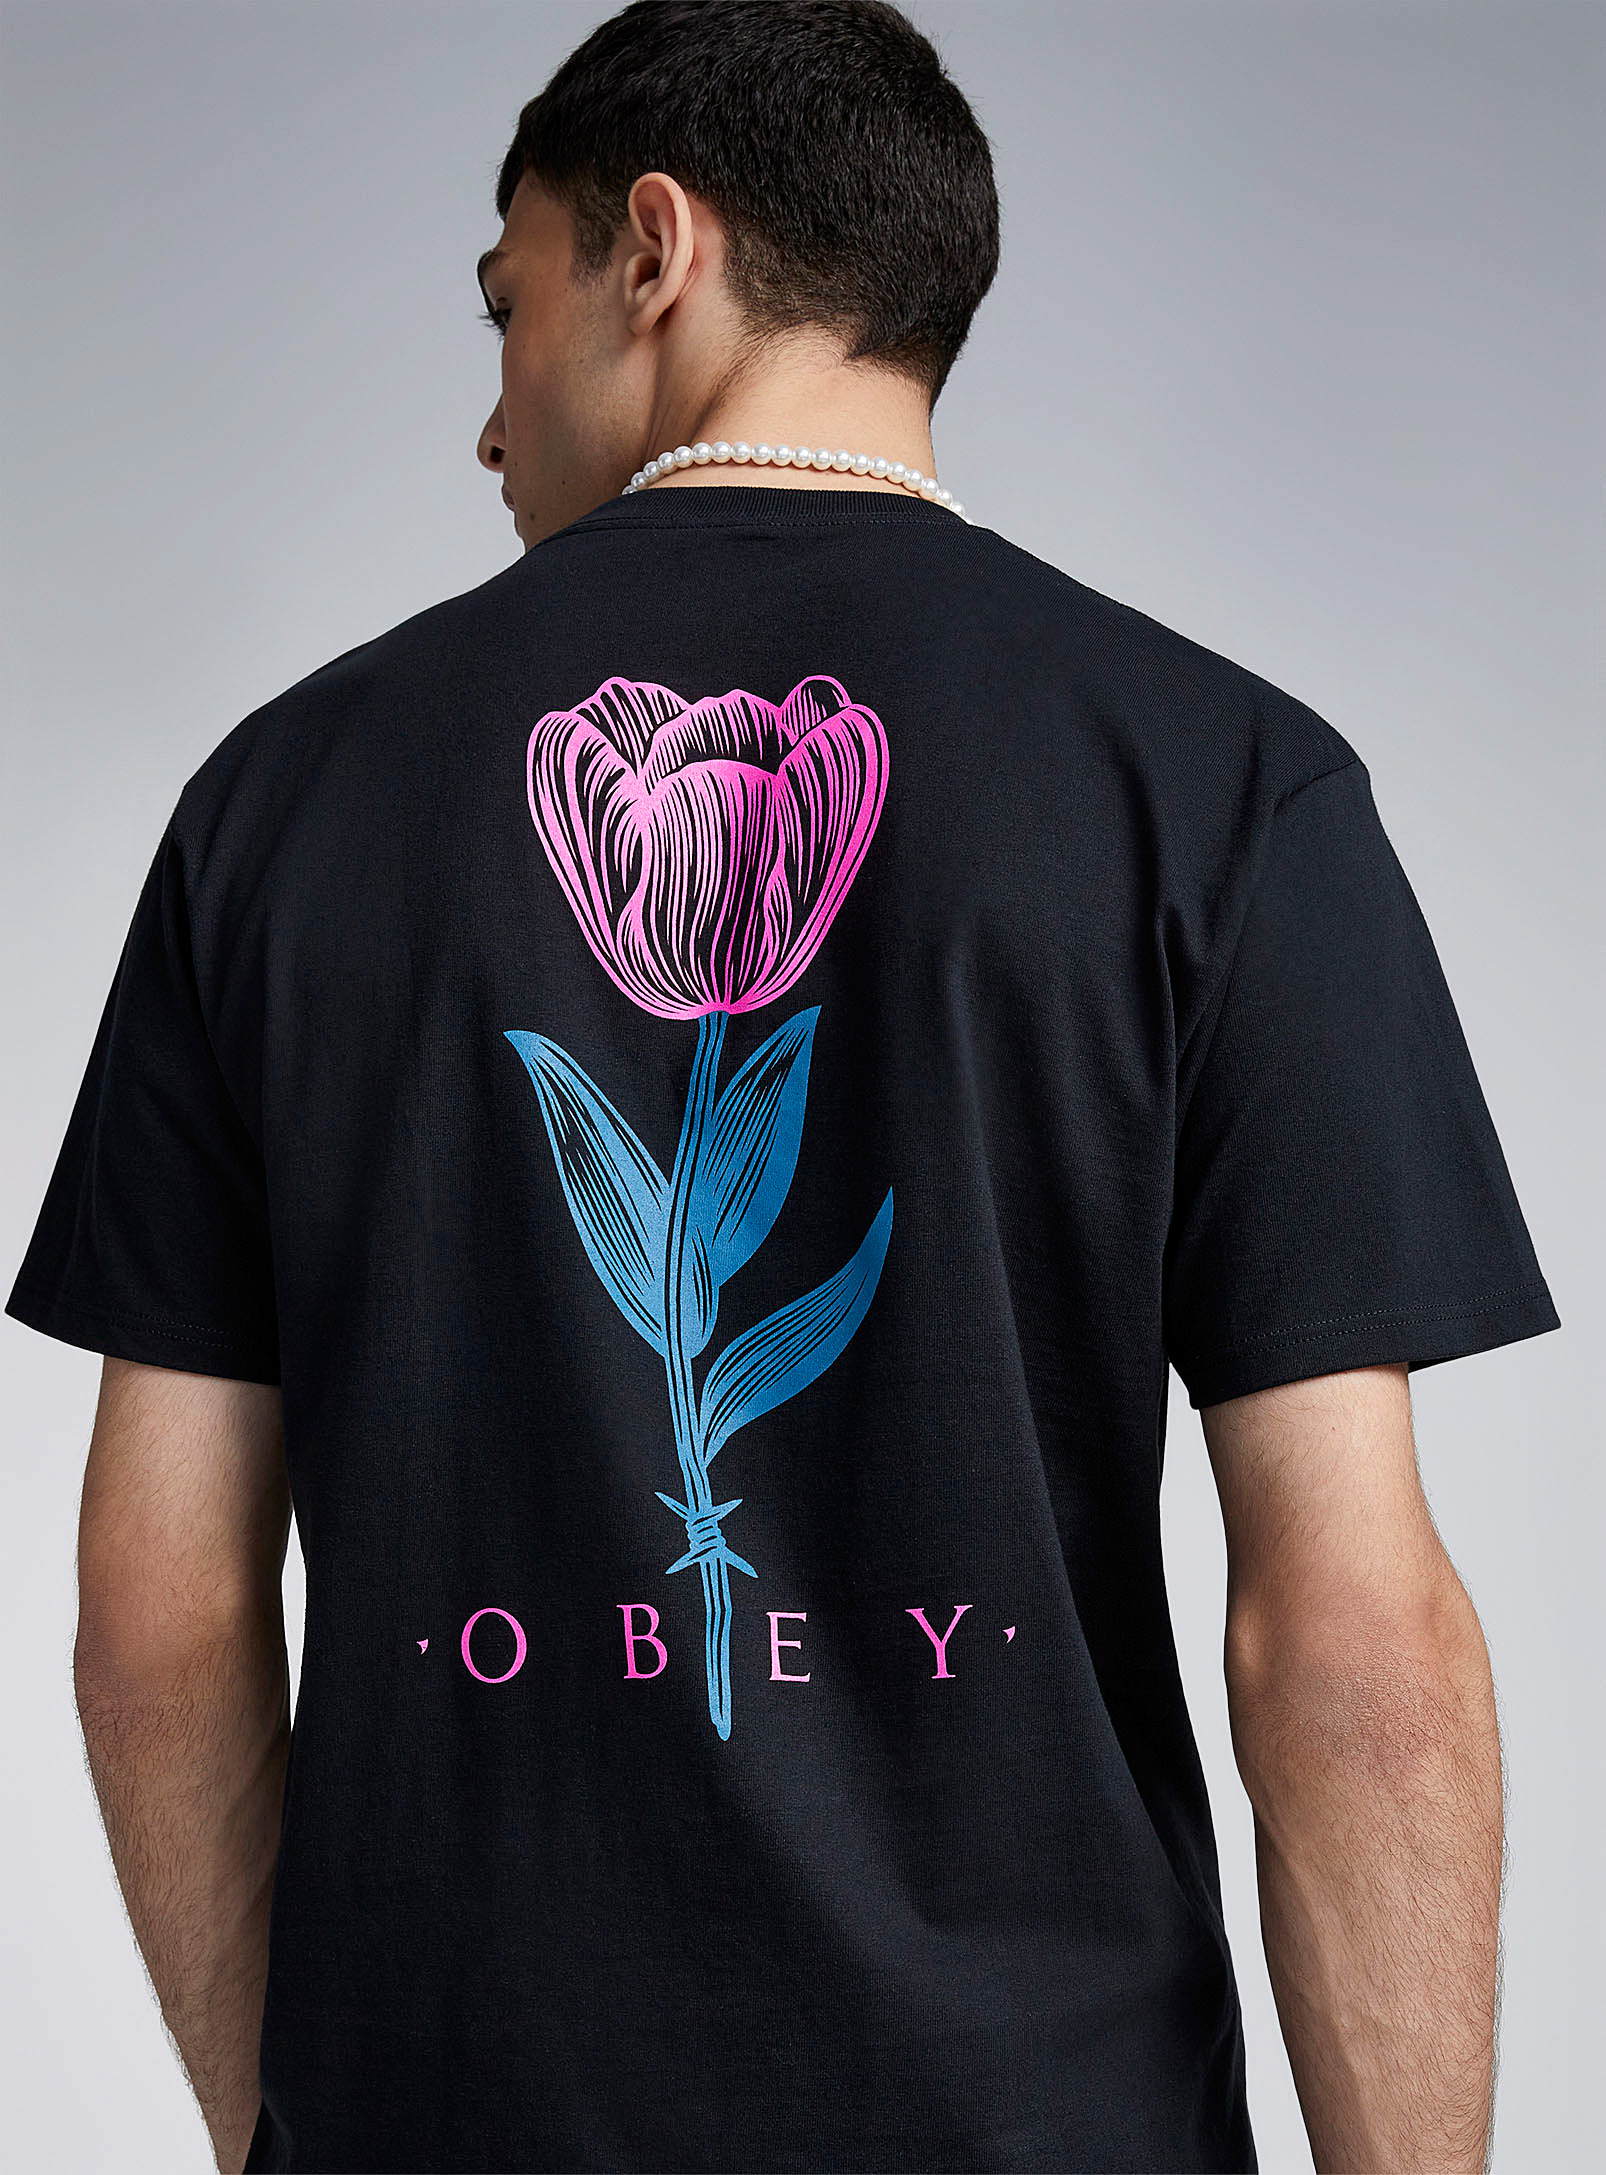 Obey - Men's Barbwire flower T-shirt